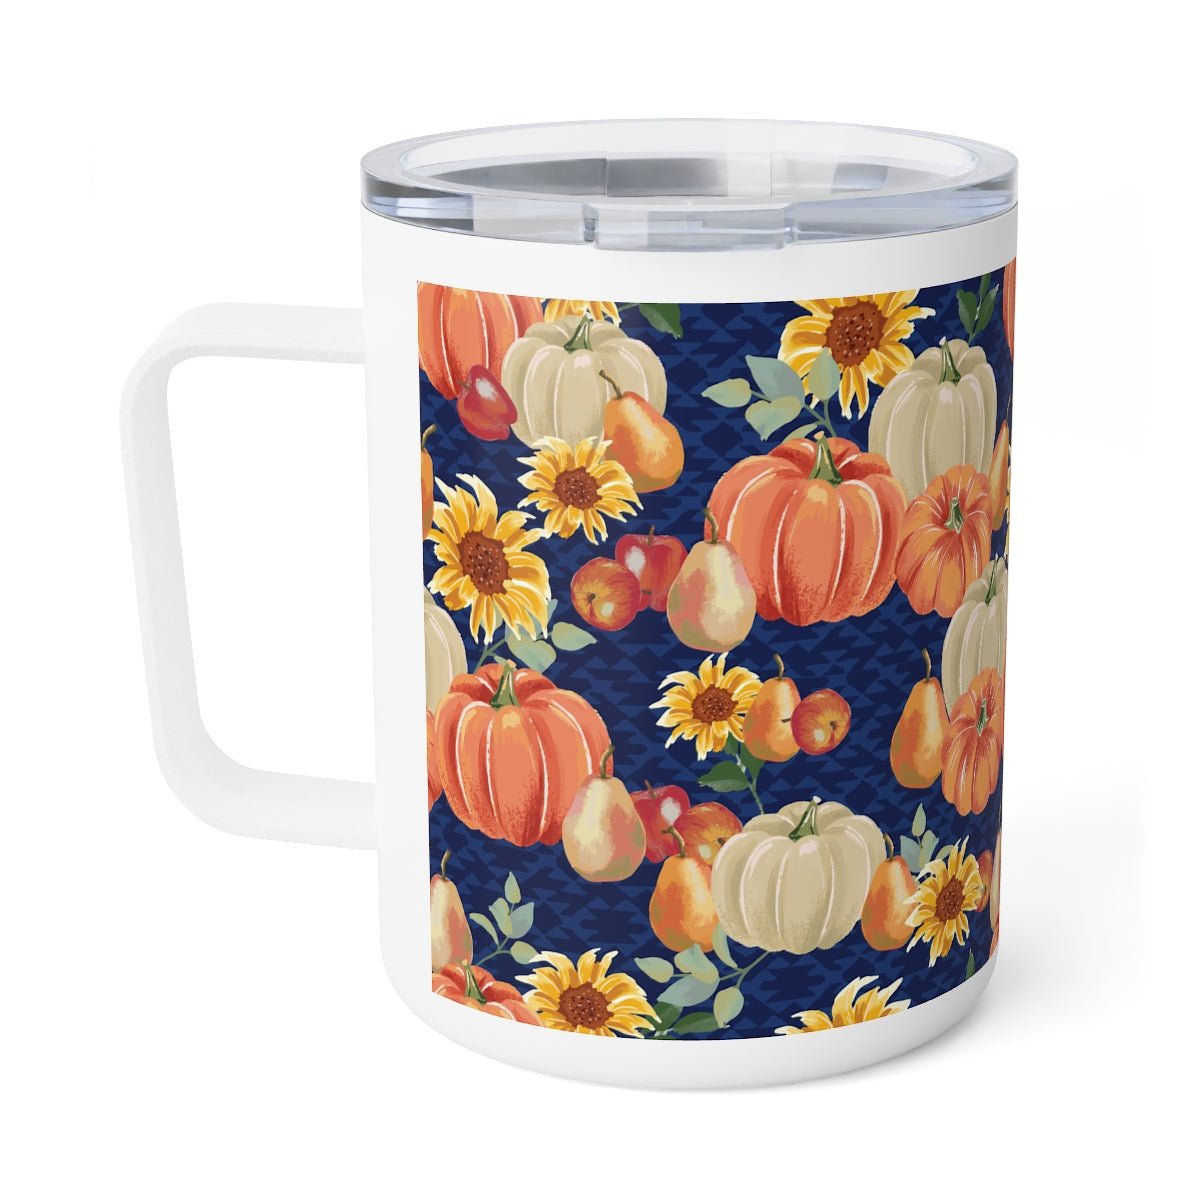 Fall Pumpkins and Sunflowers Insulated Coffee Mug, 10oz - Puffin Lime